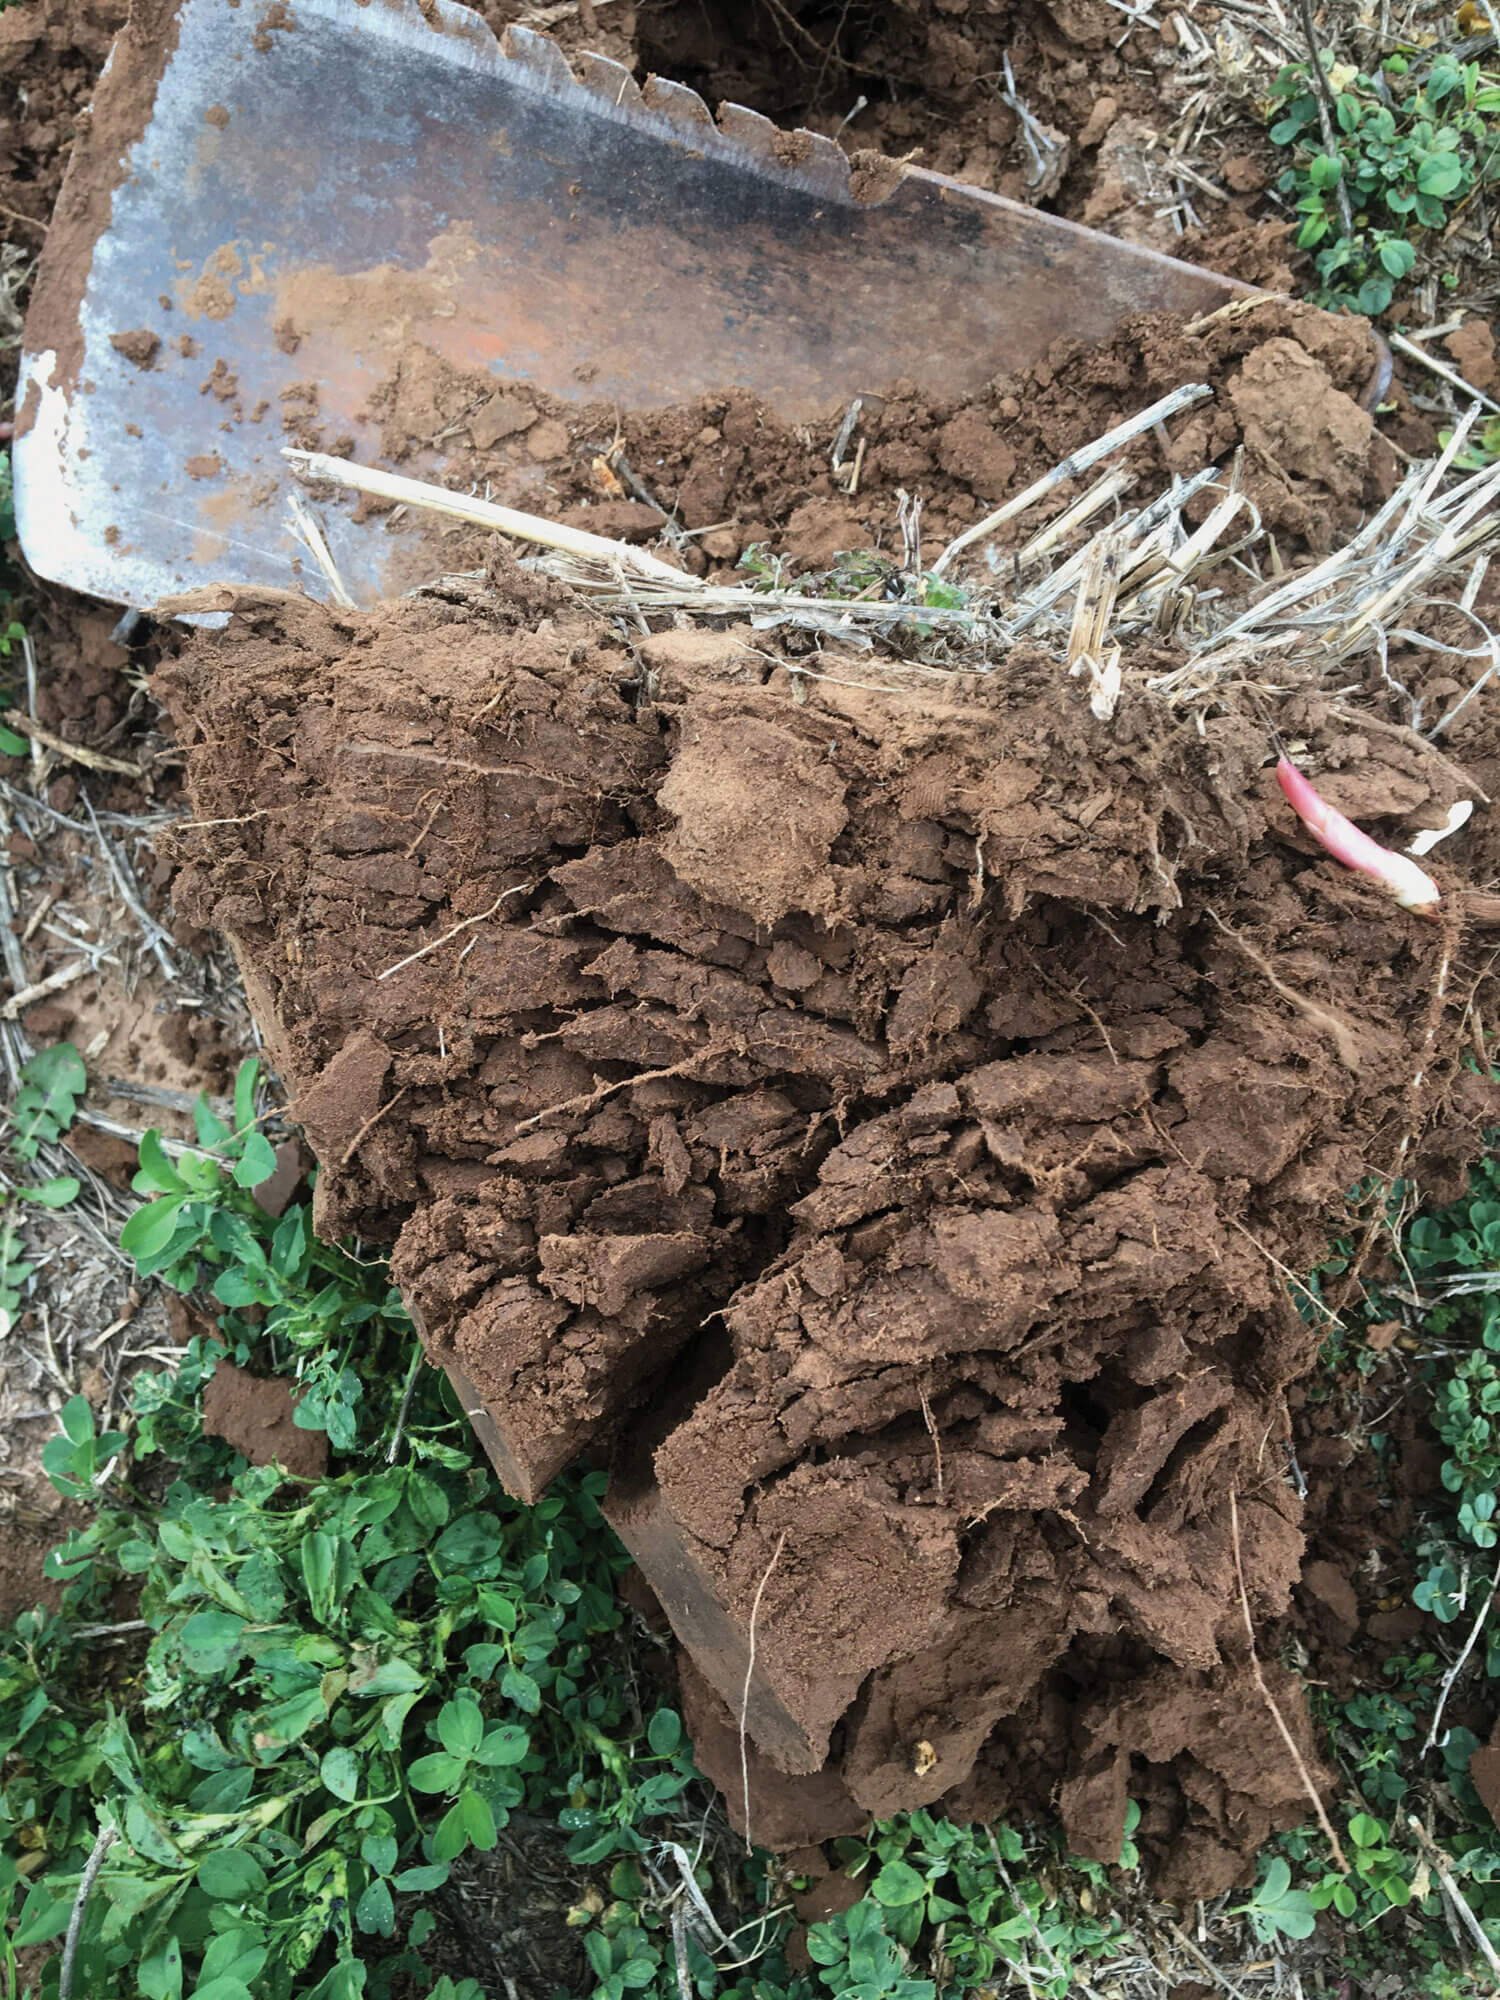 Steel shovel digging in the dirt.